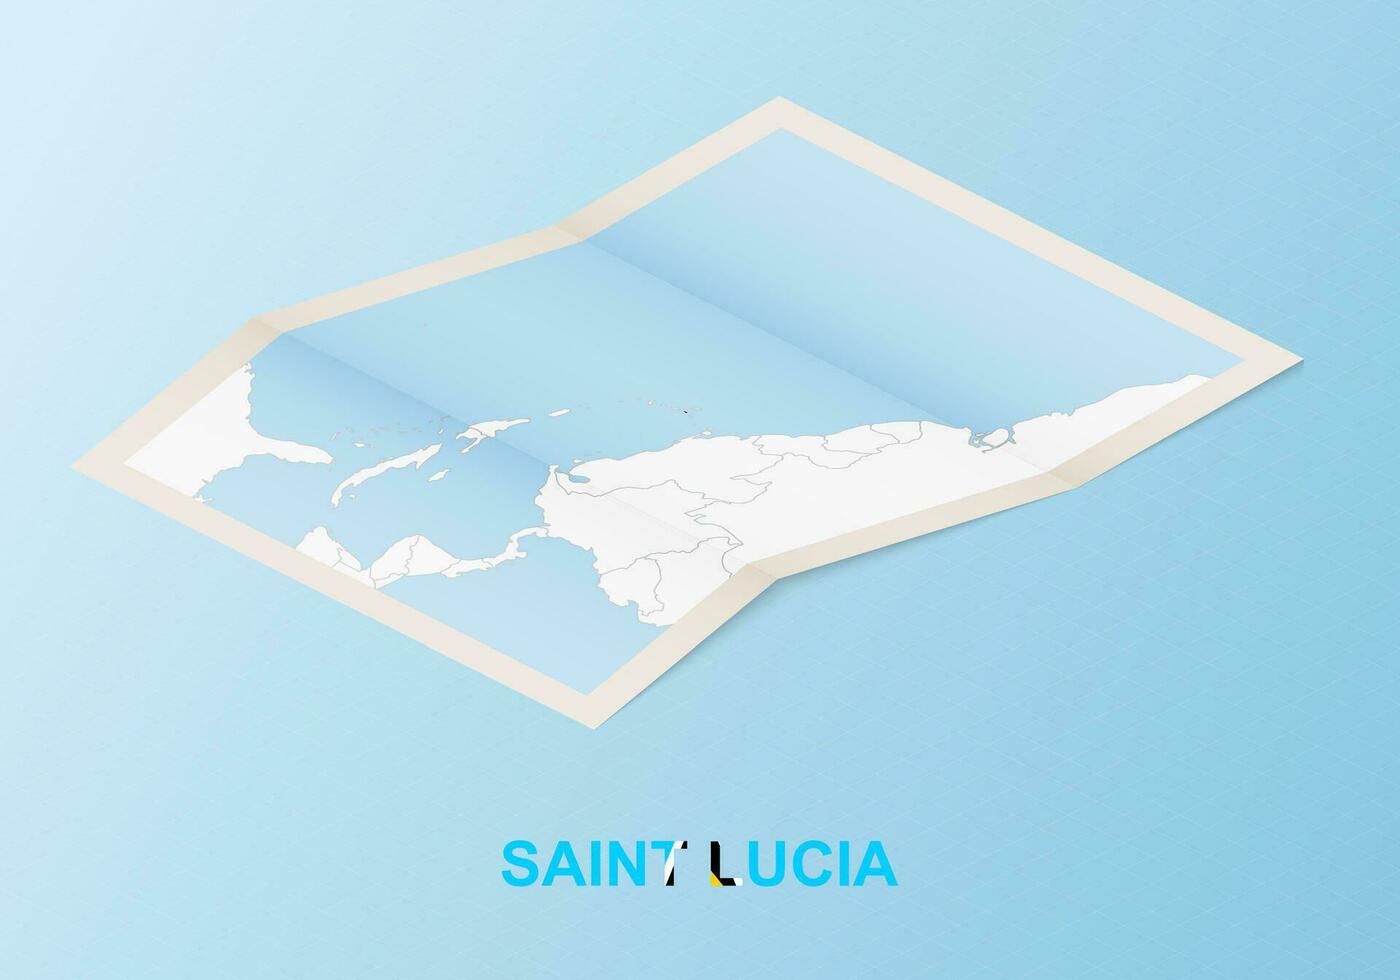 guardada papel mapa do santo lucia com vizinho países dentro isométrico estilo. vetor